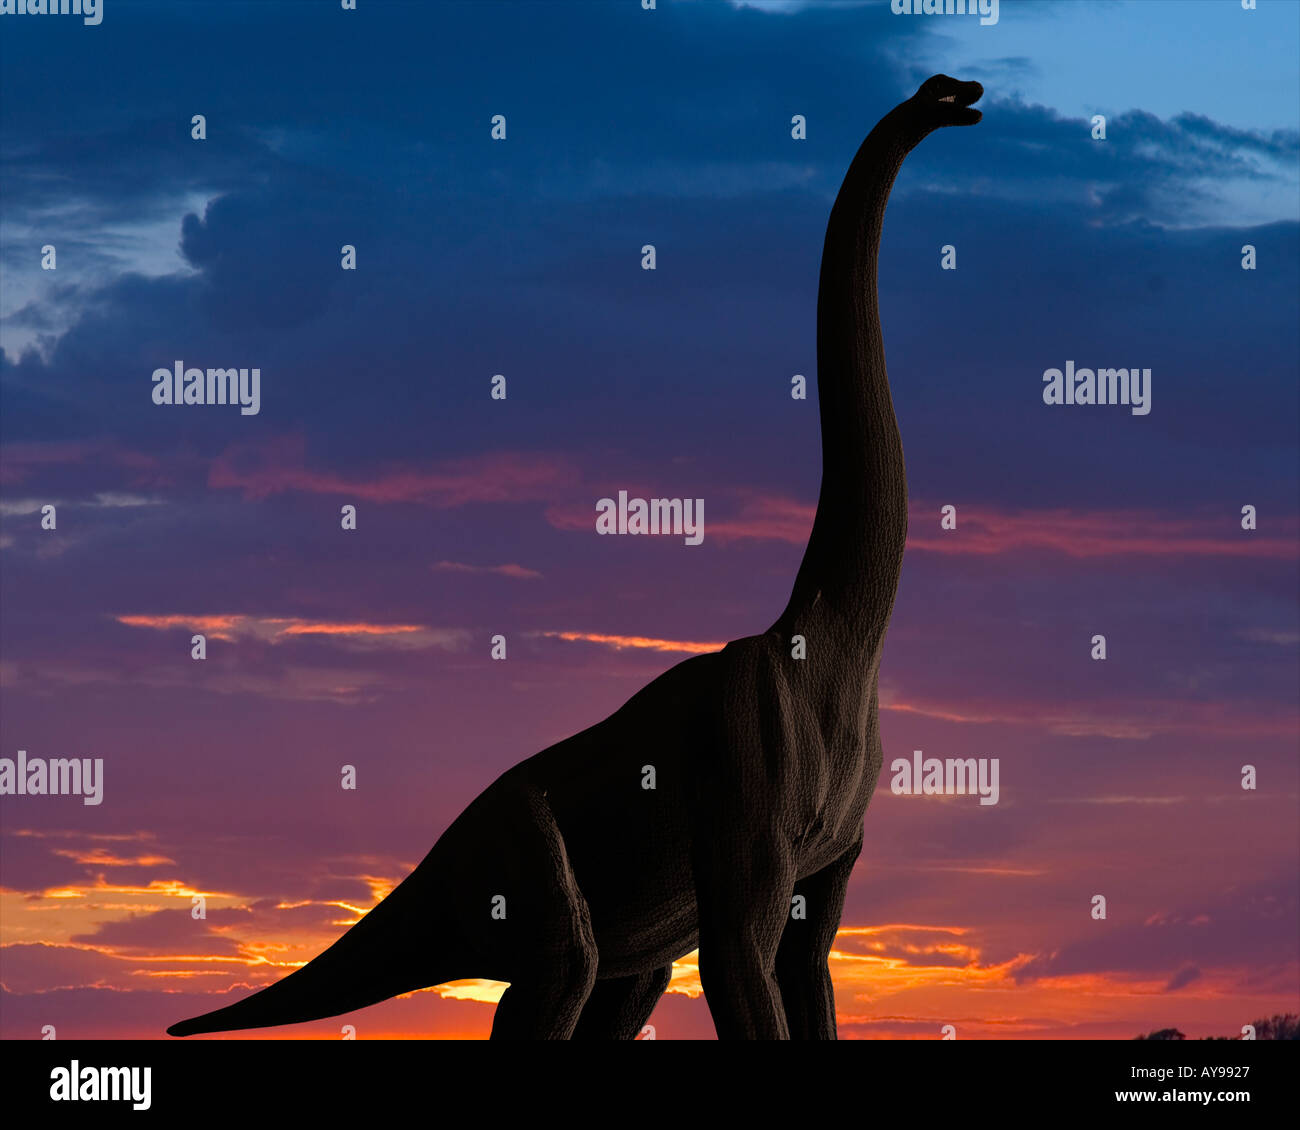 Dinosauro Brachiosaurus Foto Stock